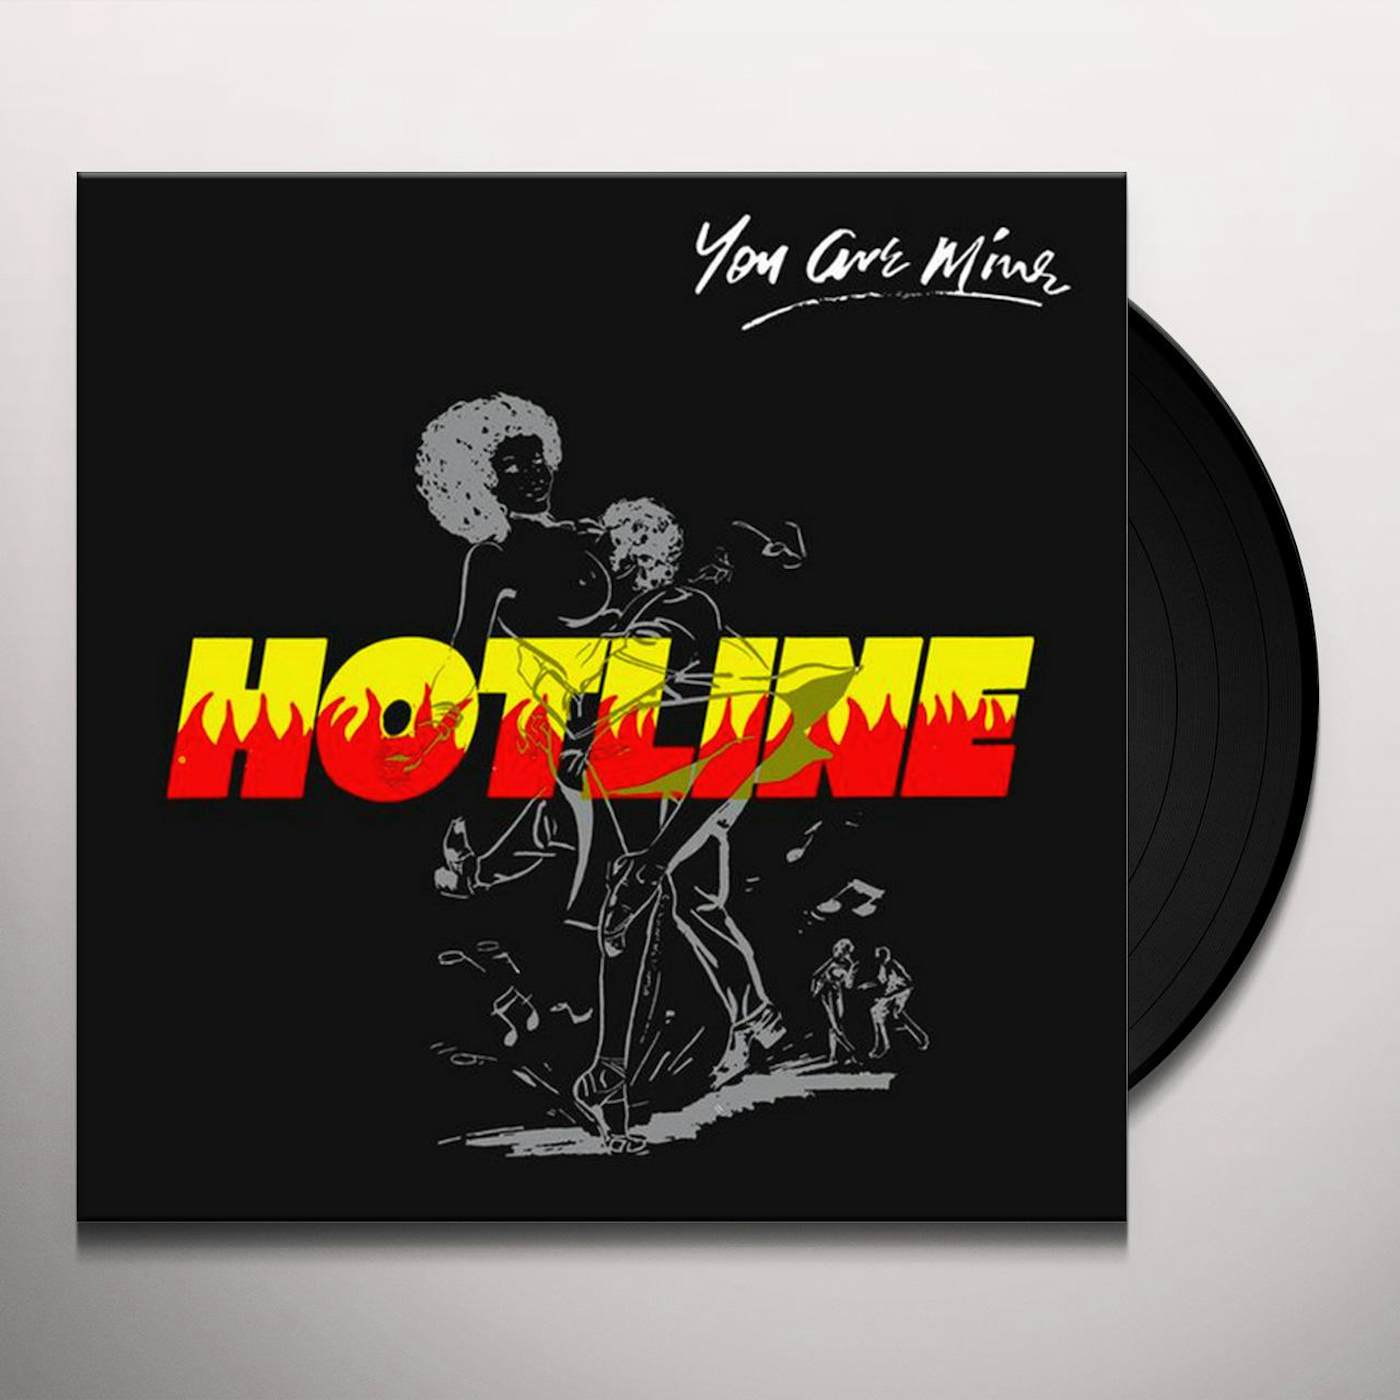 Hotline You Are Mine Vinyl Record